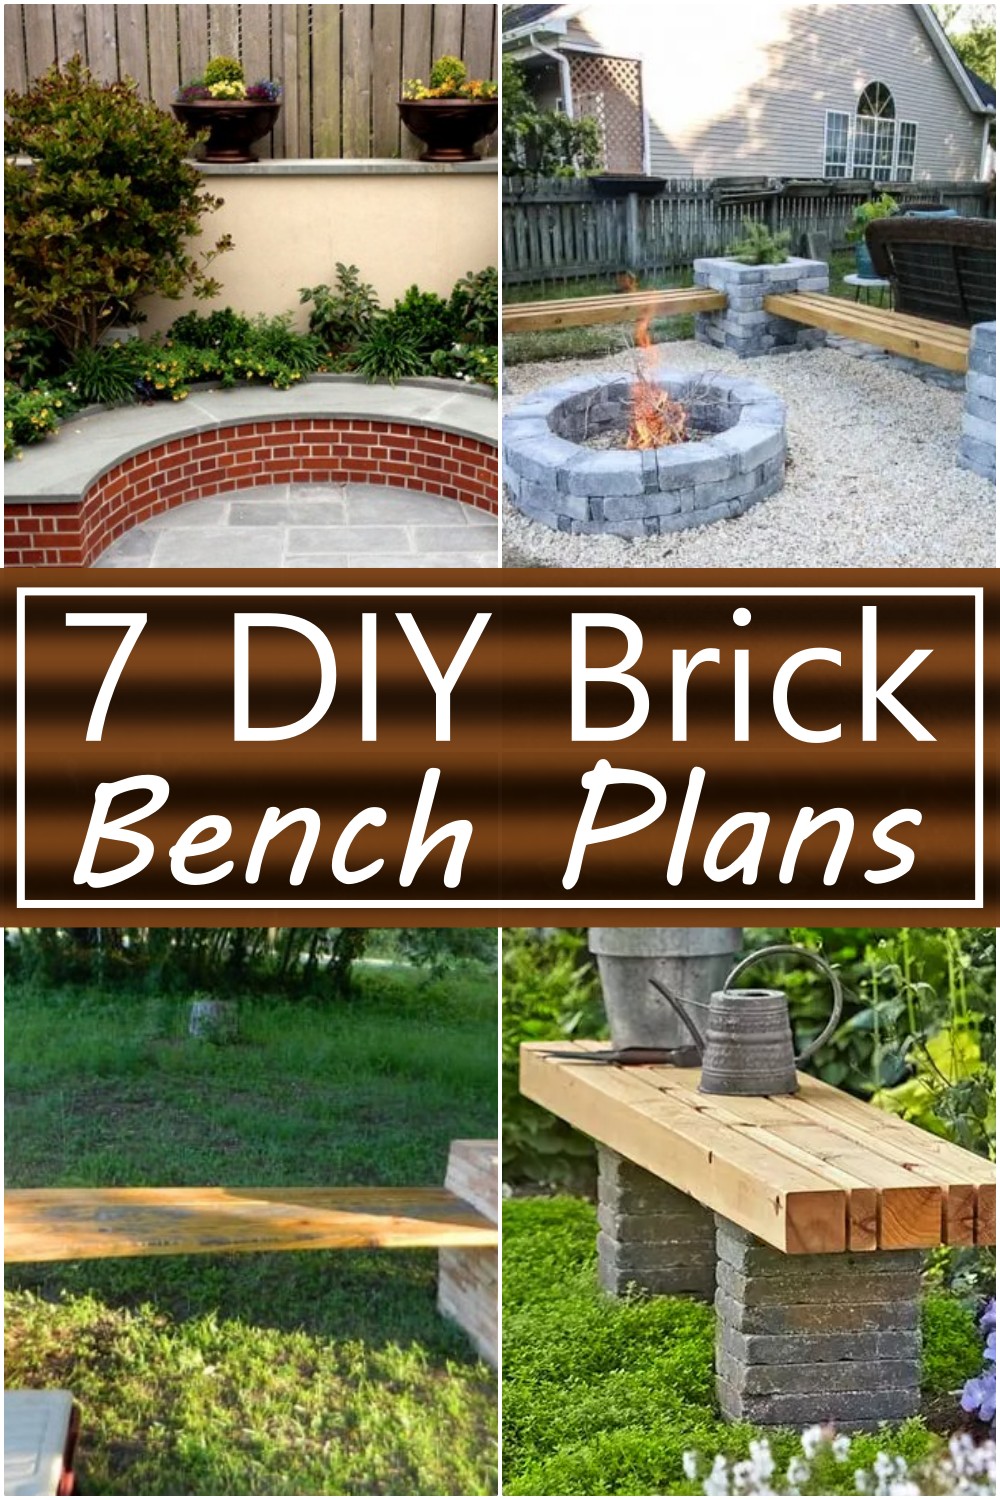 DIY Brick Bench Plans